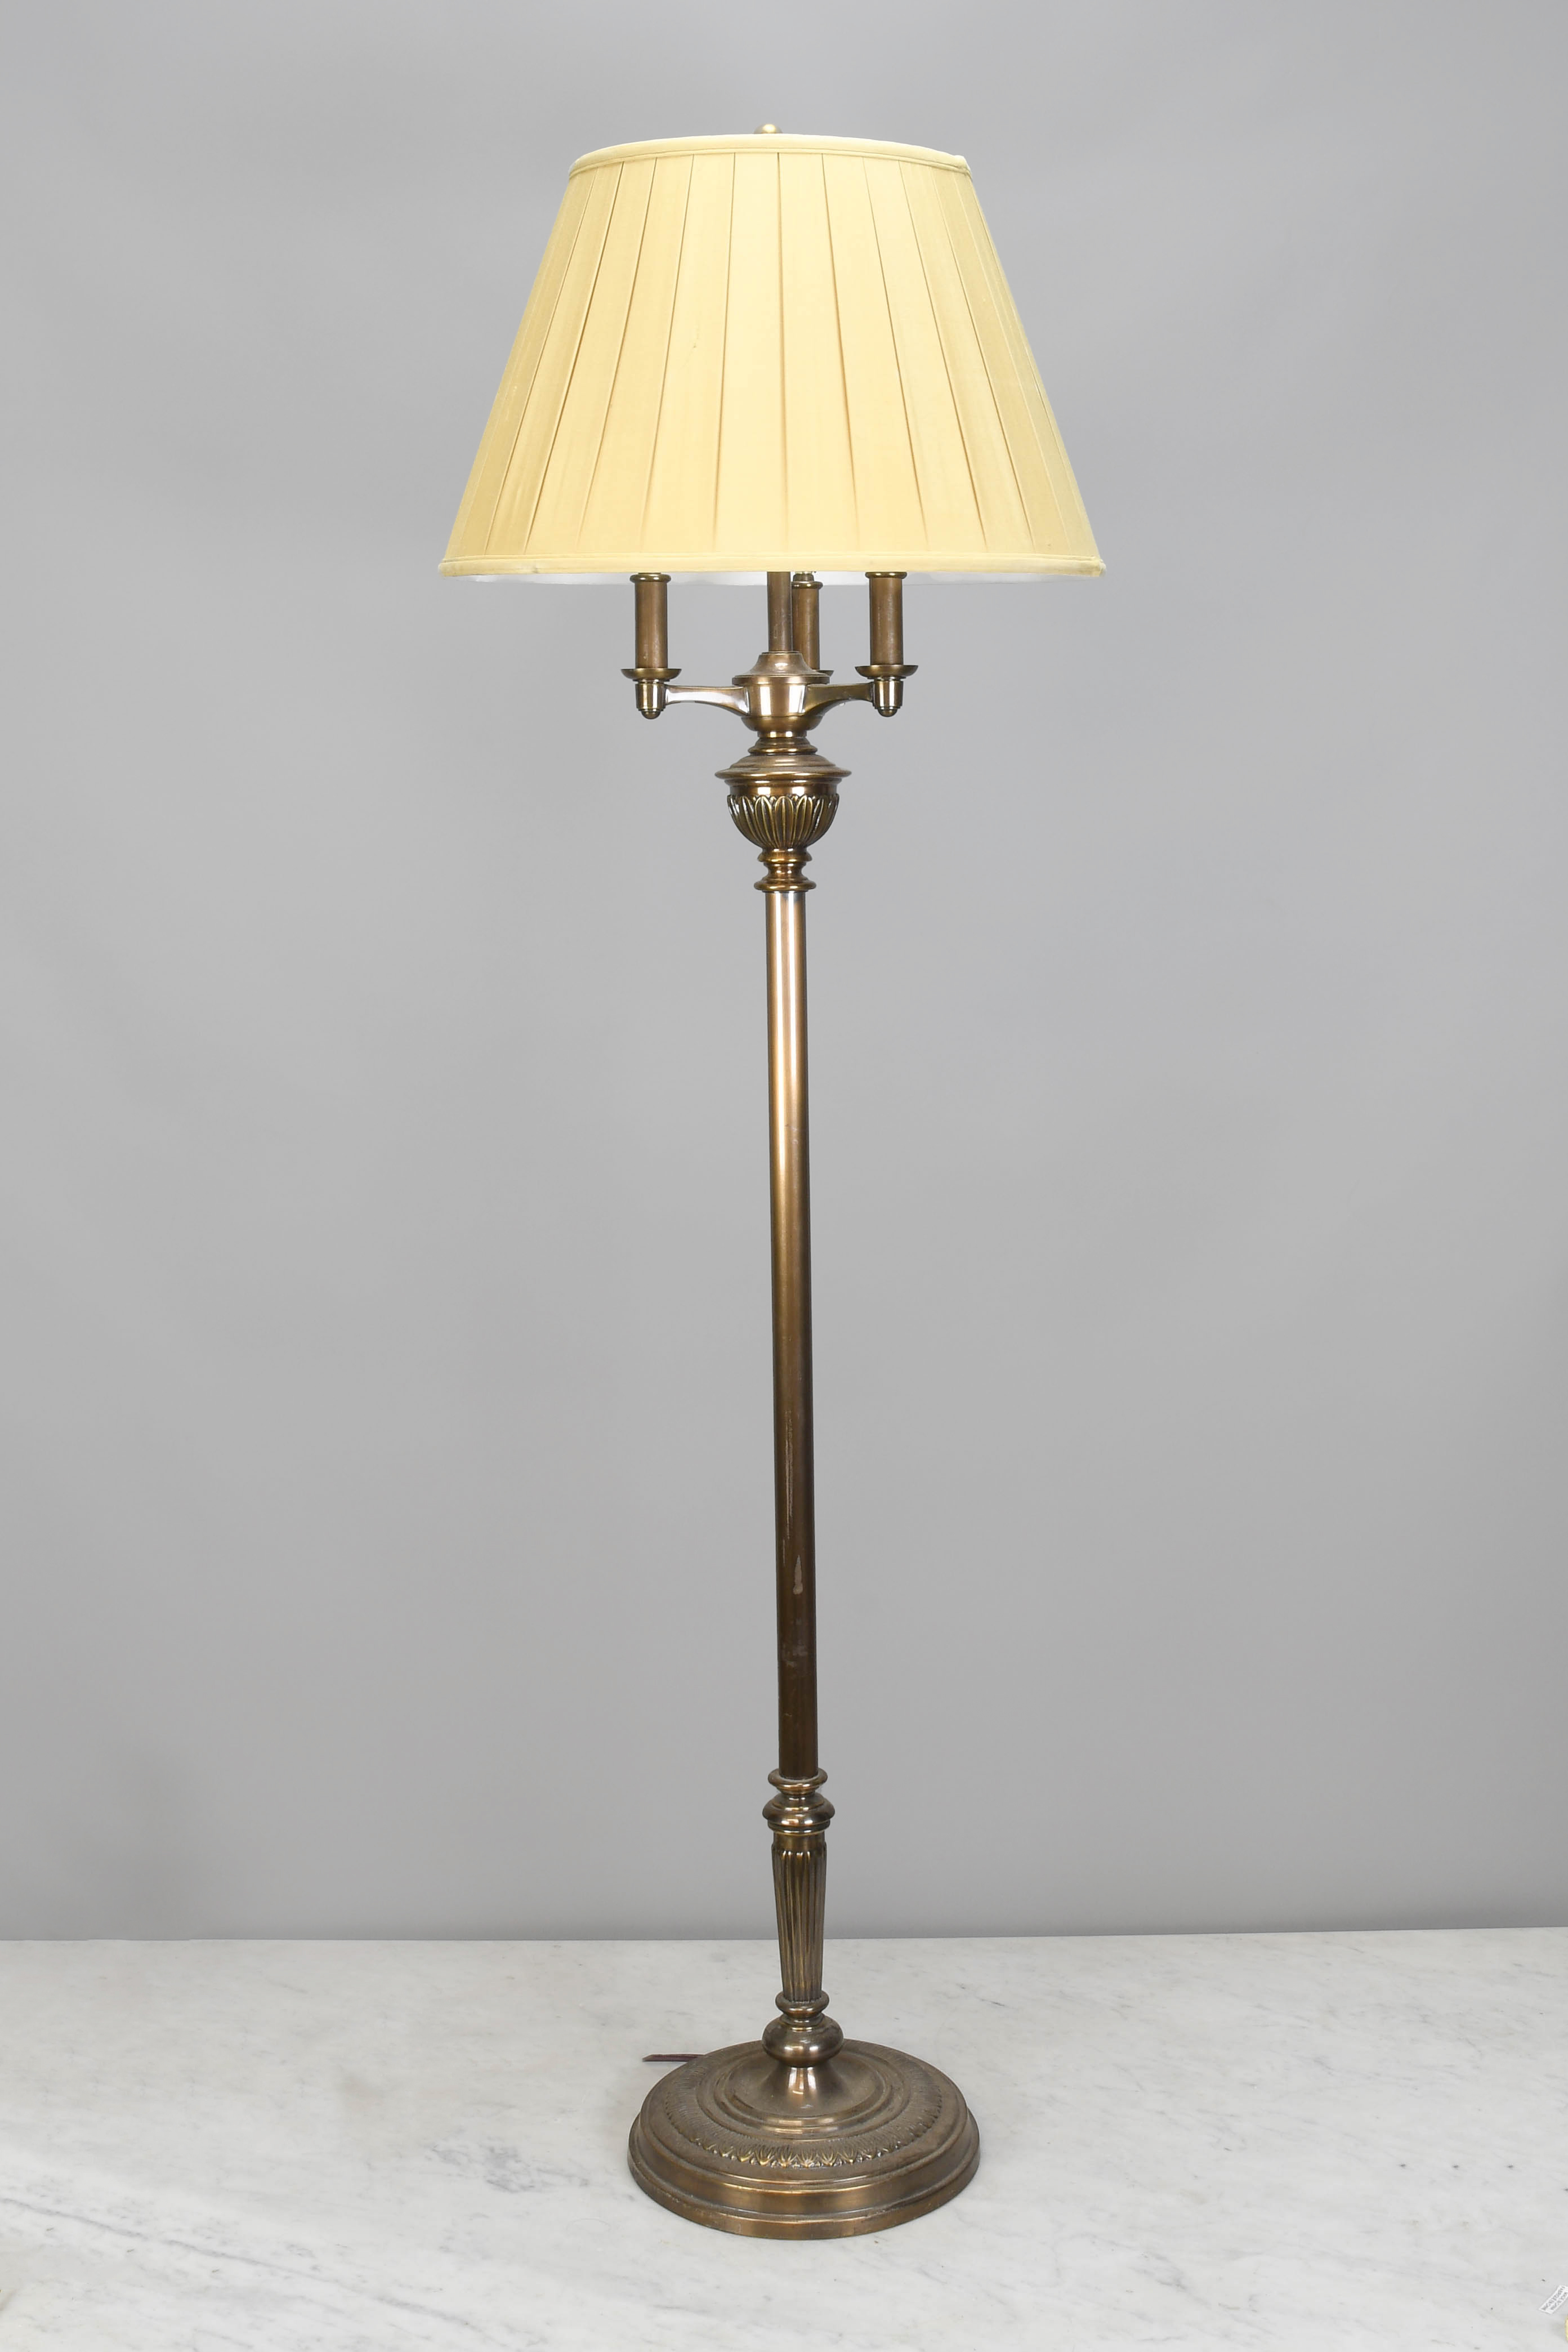 Three Candle Antique Brass Floor Lamp, Floor Lamps